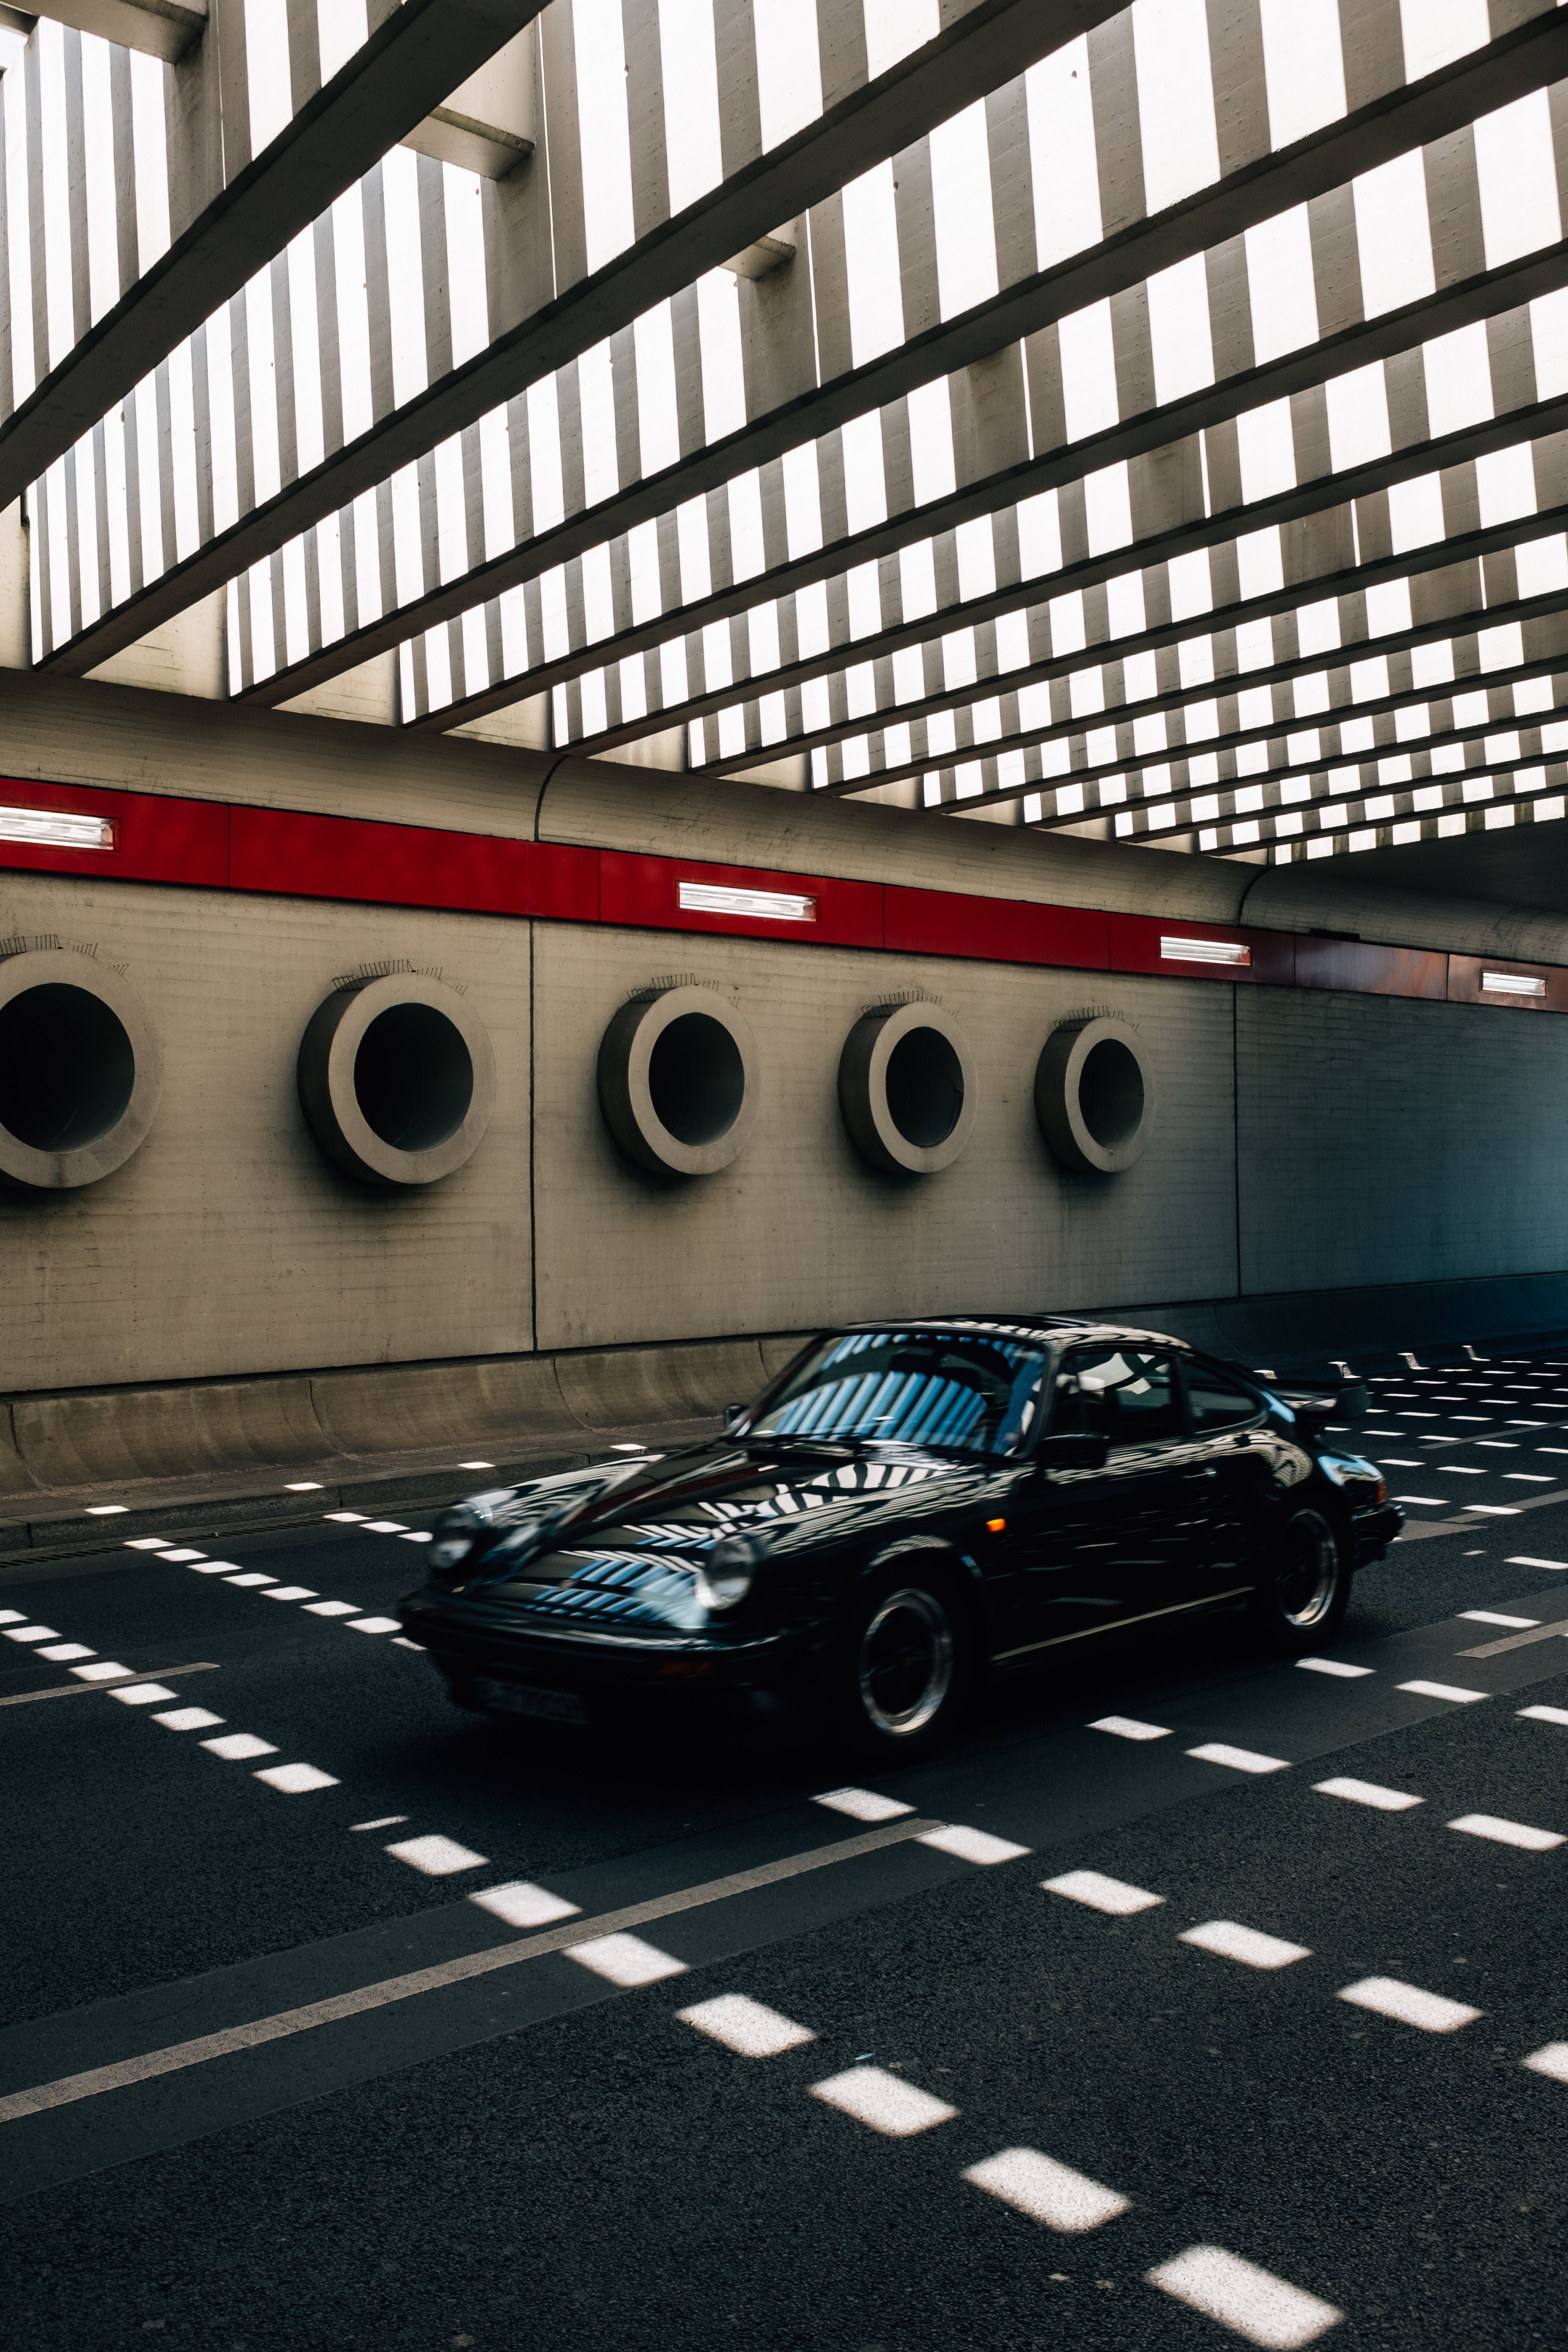 Corridas de carros clássicos através de fotos do túnel de Modeern